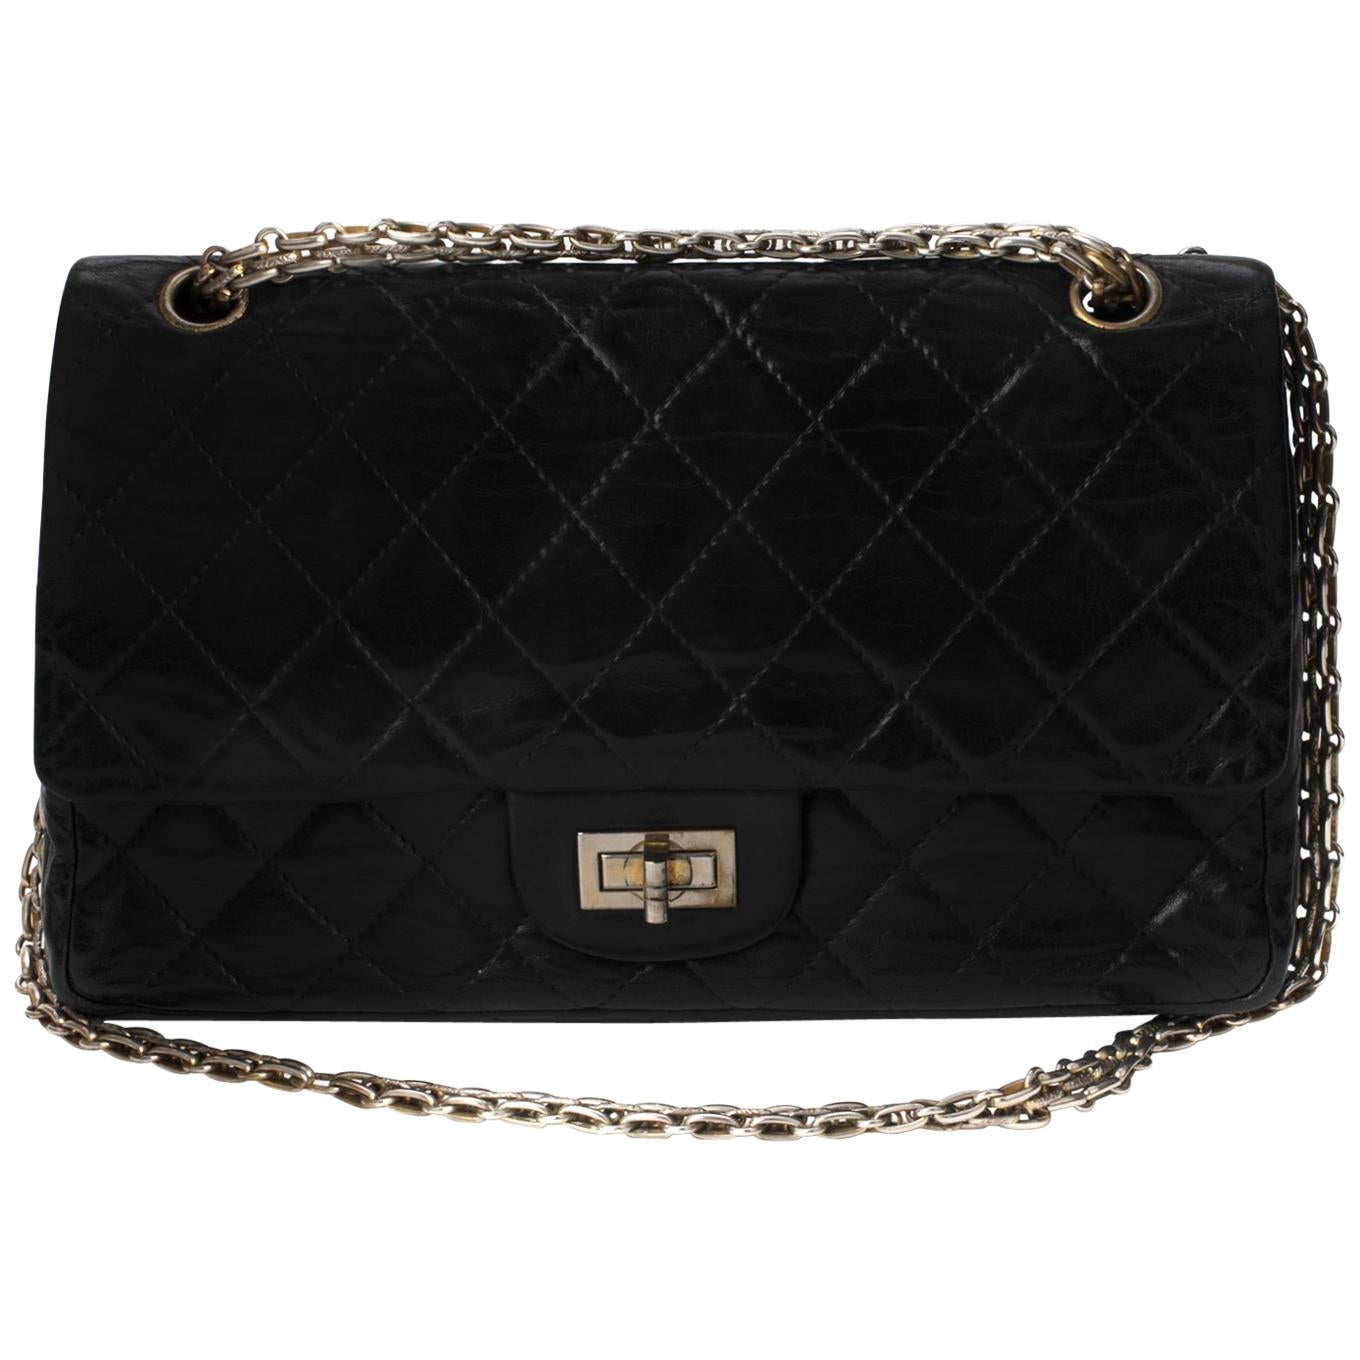 Handbag Chanel 2.55 in Black lambskin Leather !